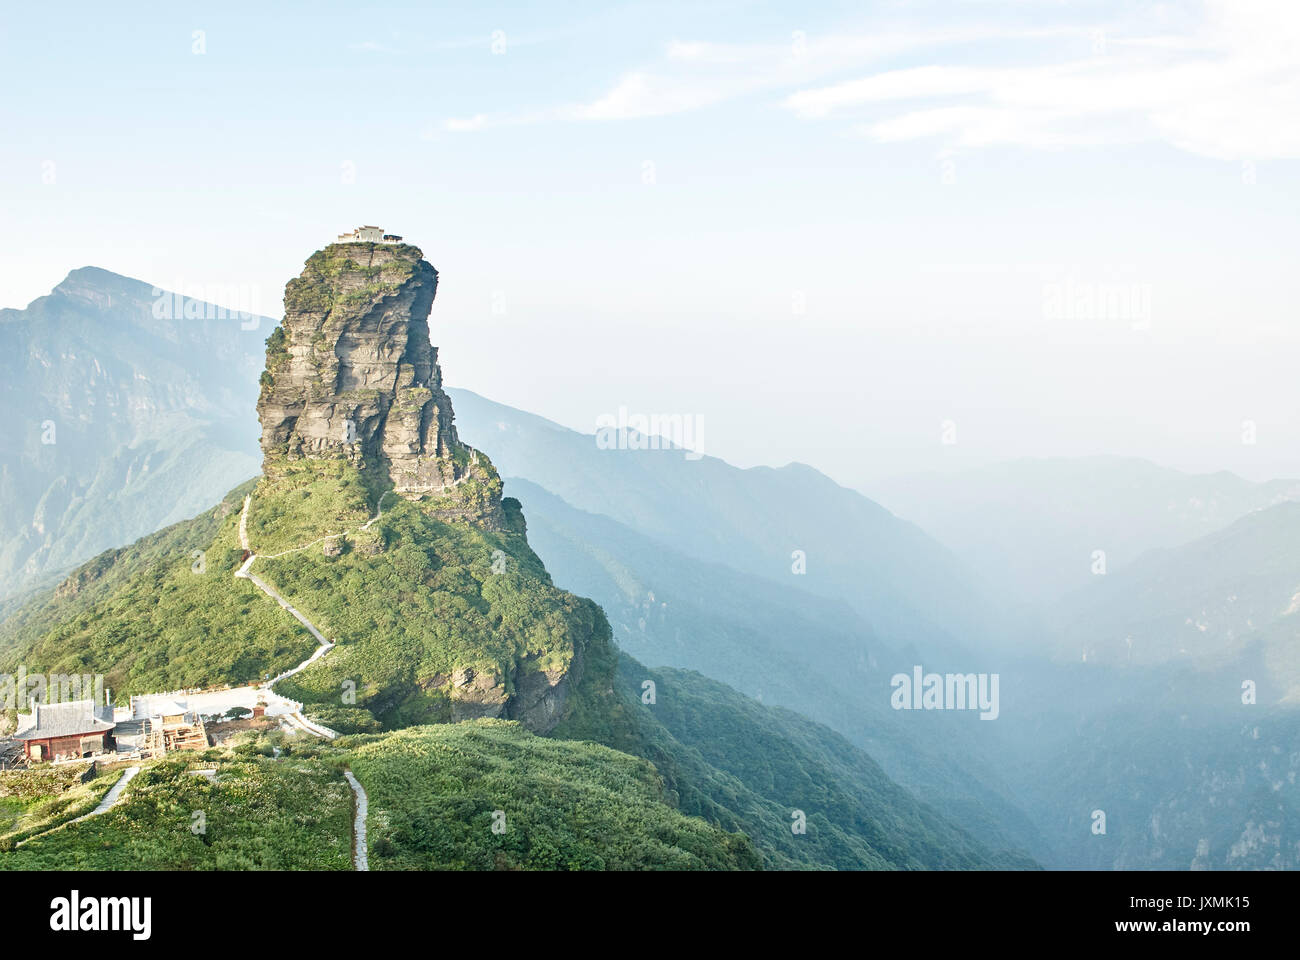 Elevated view of Mount Fanjing rock formation and misty landscape, Jiangkou, Guizhou, China Stock Photo